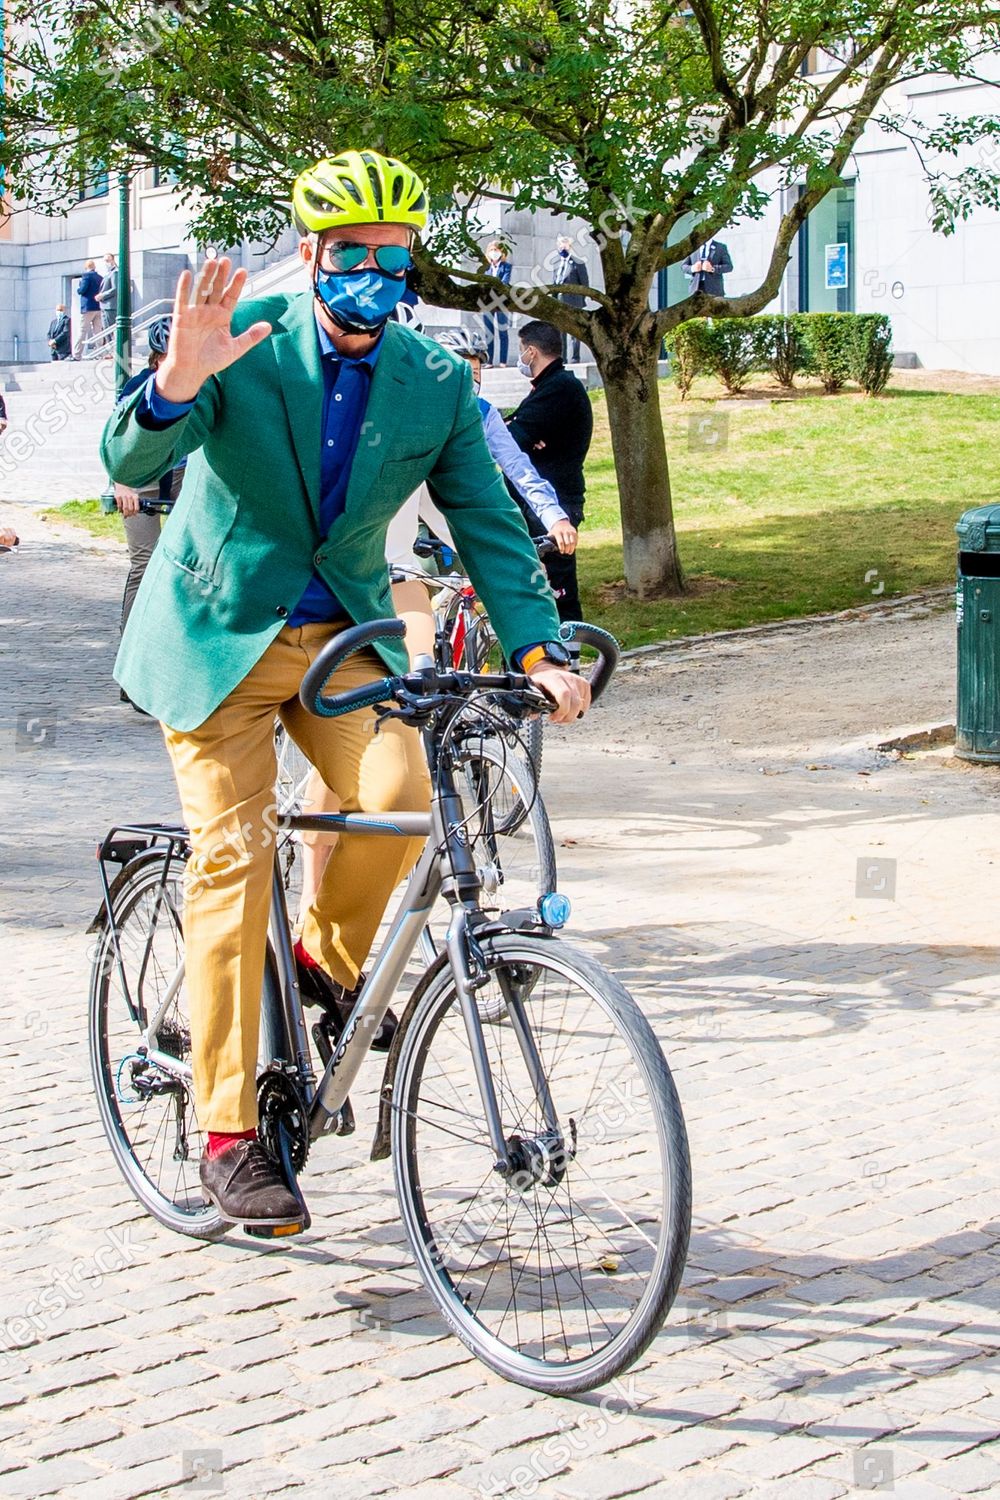 belgian-royals-cycle-on-car-free-sunday-brussels-belgium-shutterstock-editorial-10783150t.jpg